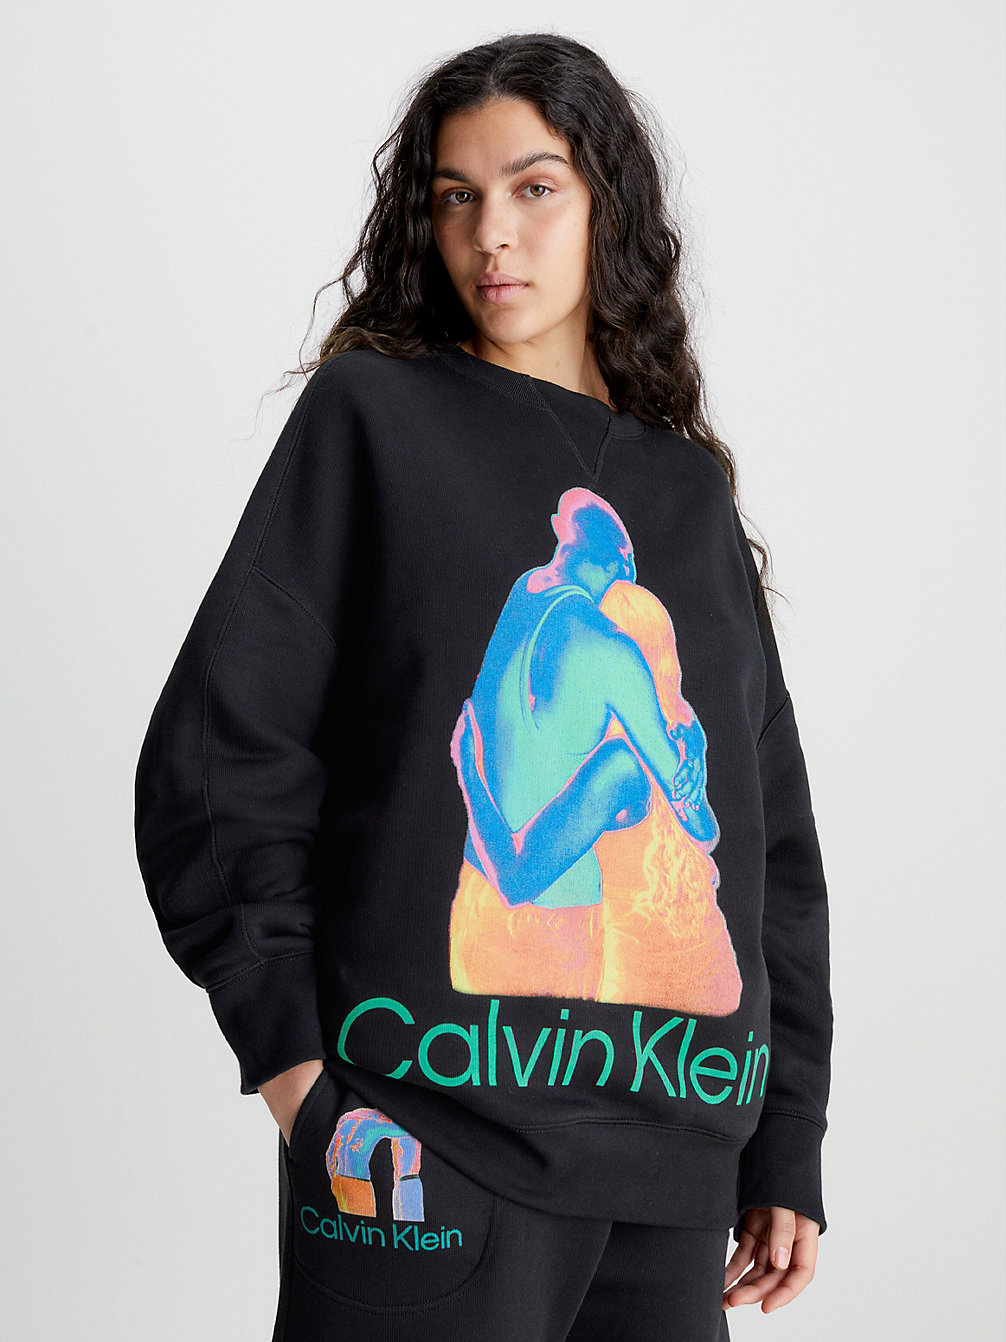 BLACK BEAUTY Unisex Printed Sweatshirt - CK Standards undefined men Calvin Klein